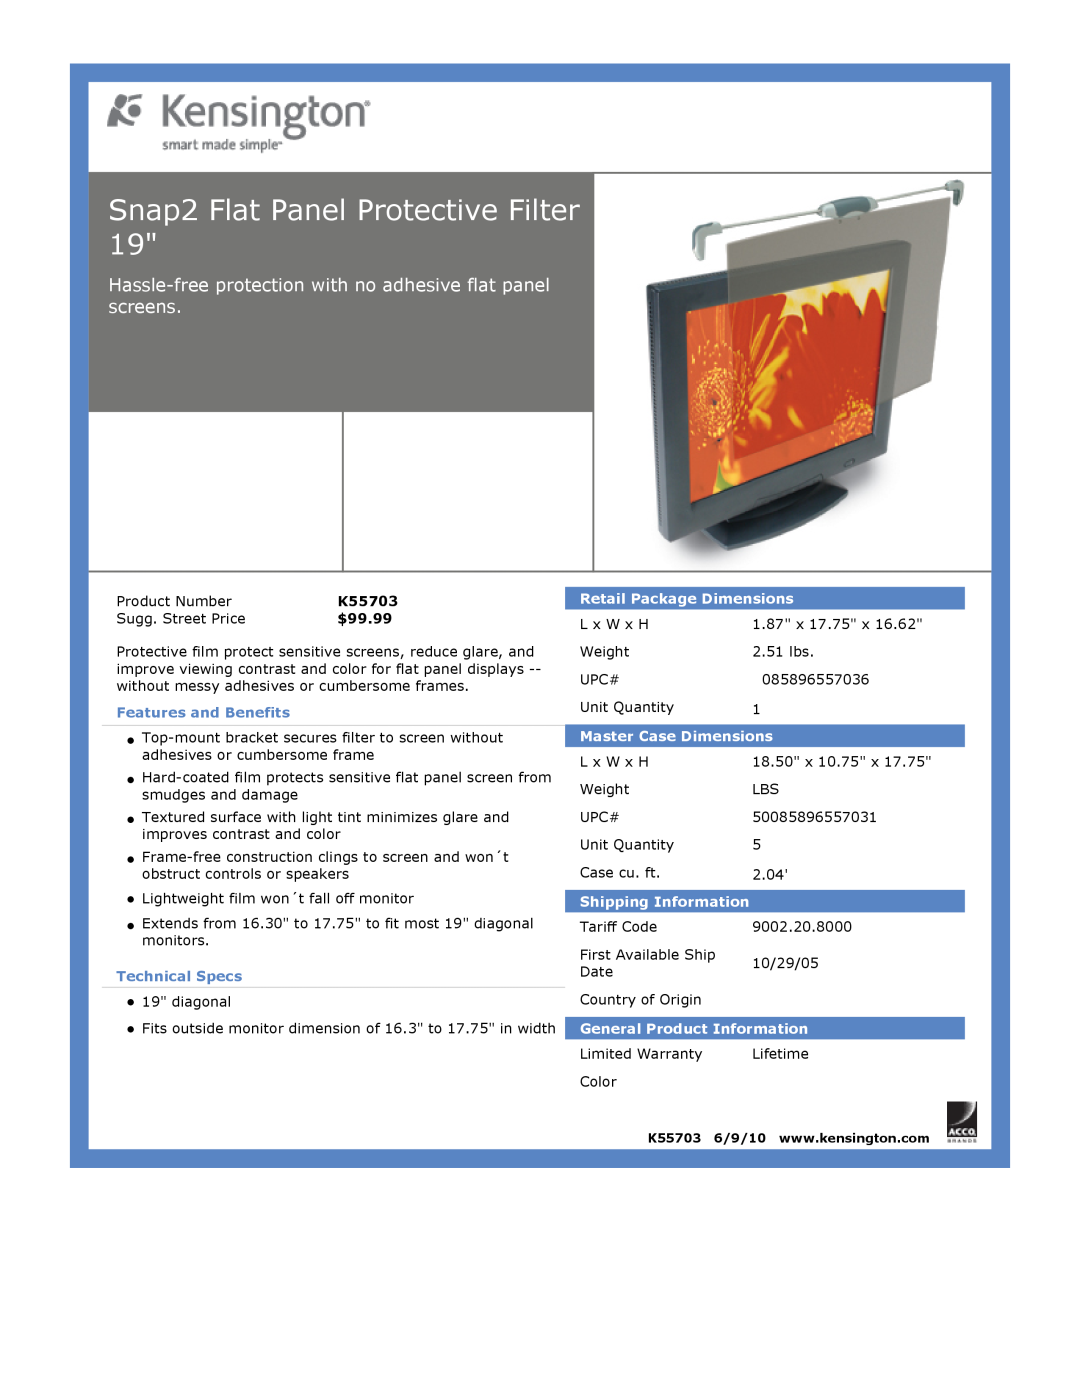 Kensington EU64325 dimensions Snap2 Flat Panel Protective Filter, $99.99, Features and Benefits, Technical Specs 